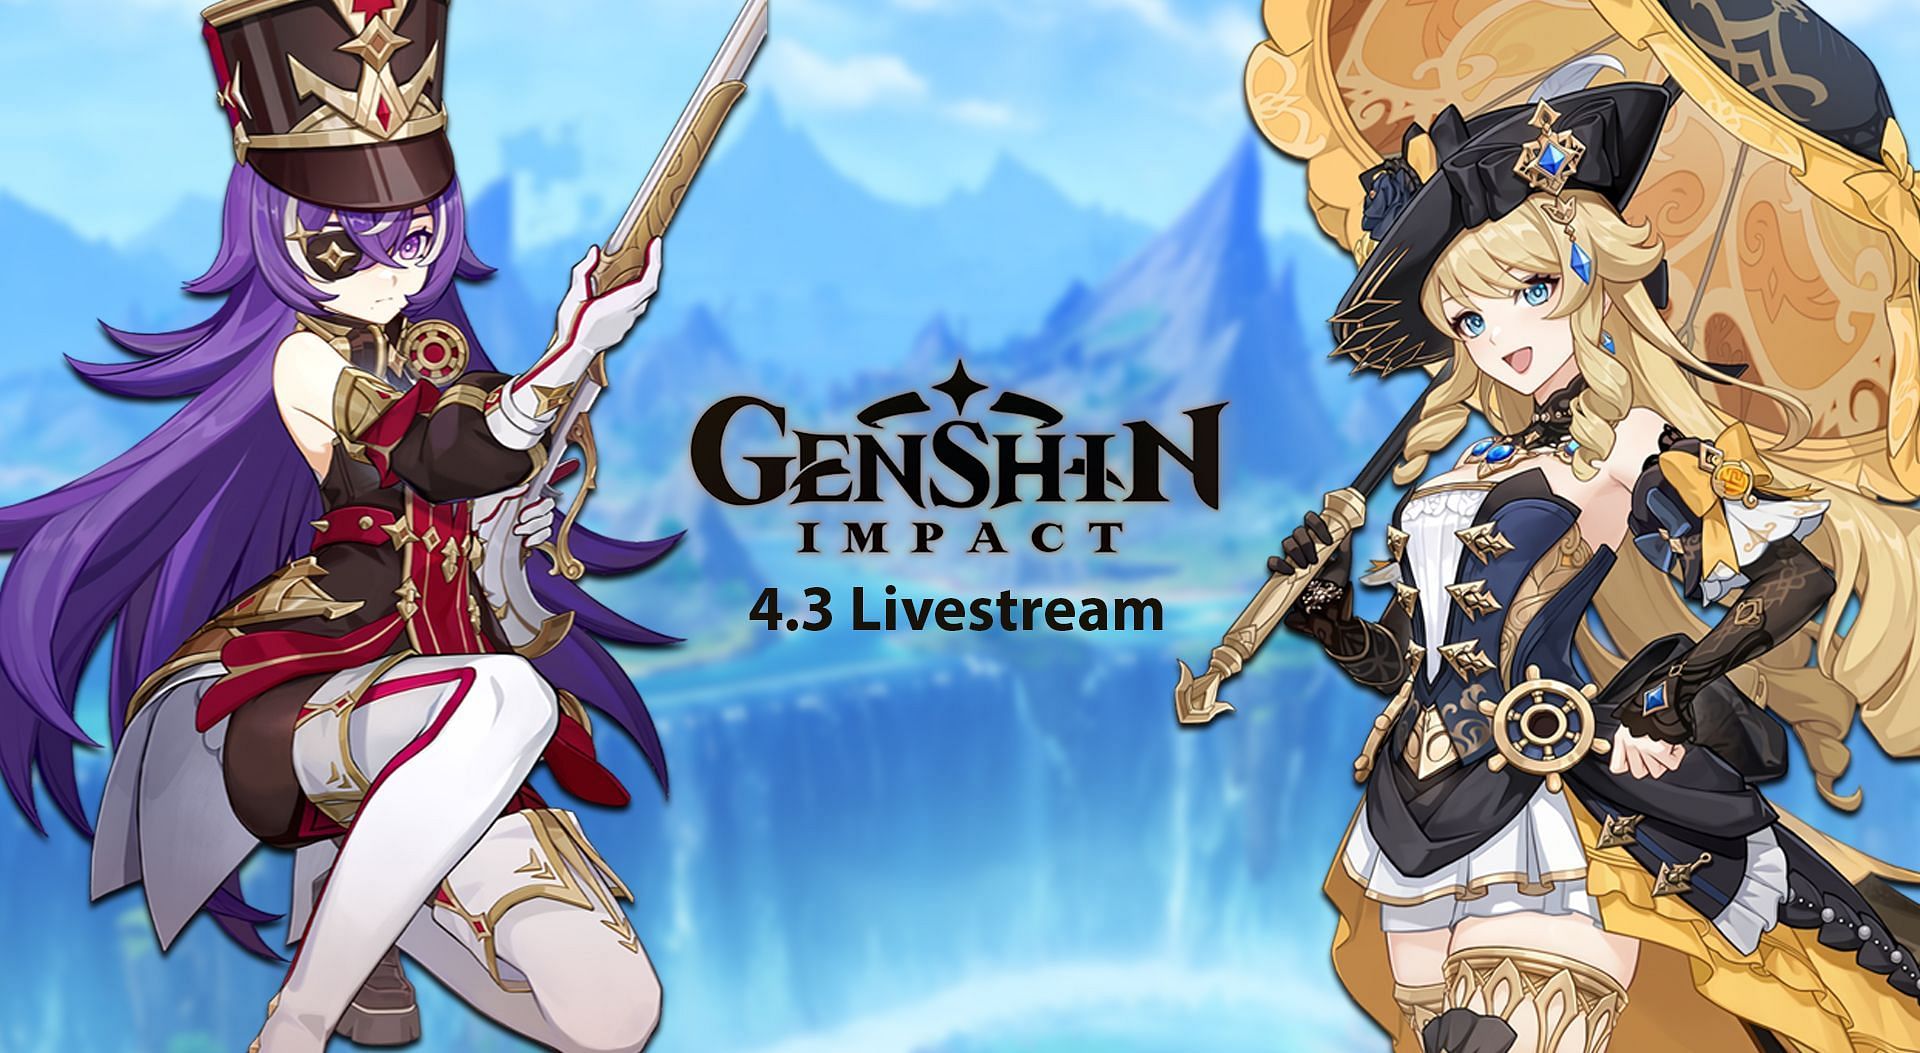 Genshin Impact 4.3 Livestream Codes: Unlock Free Primogems & Other